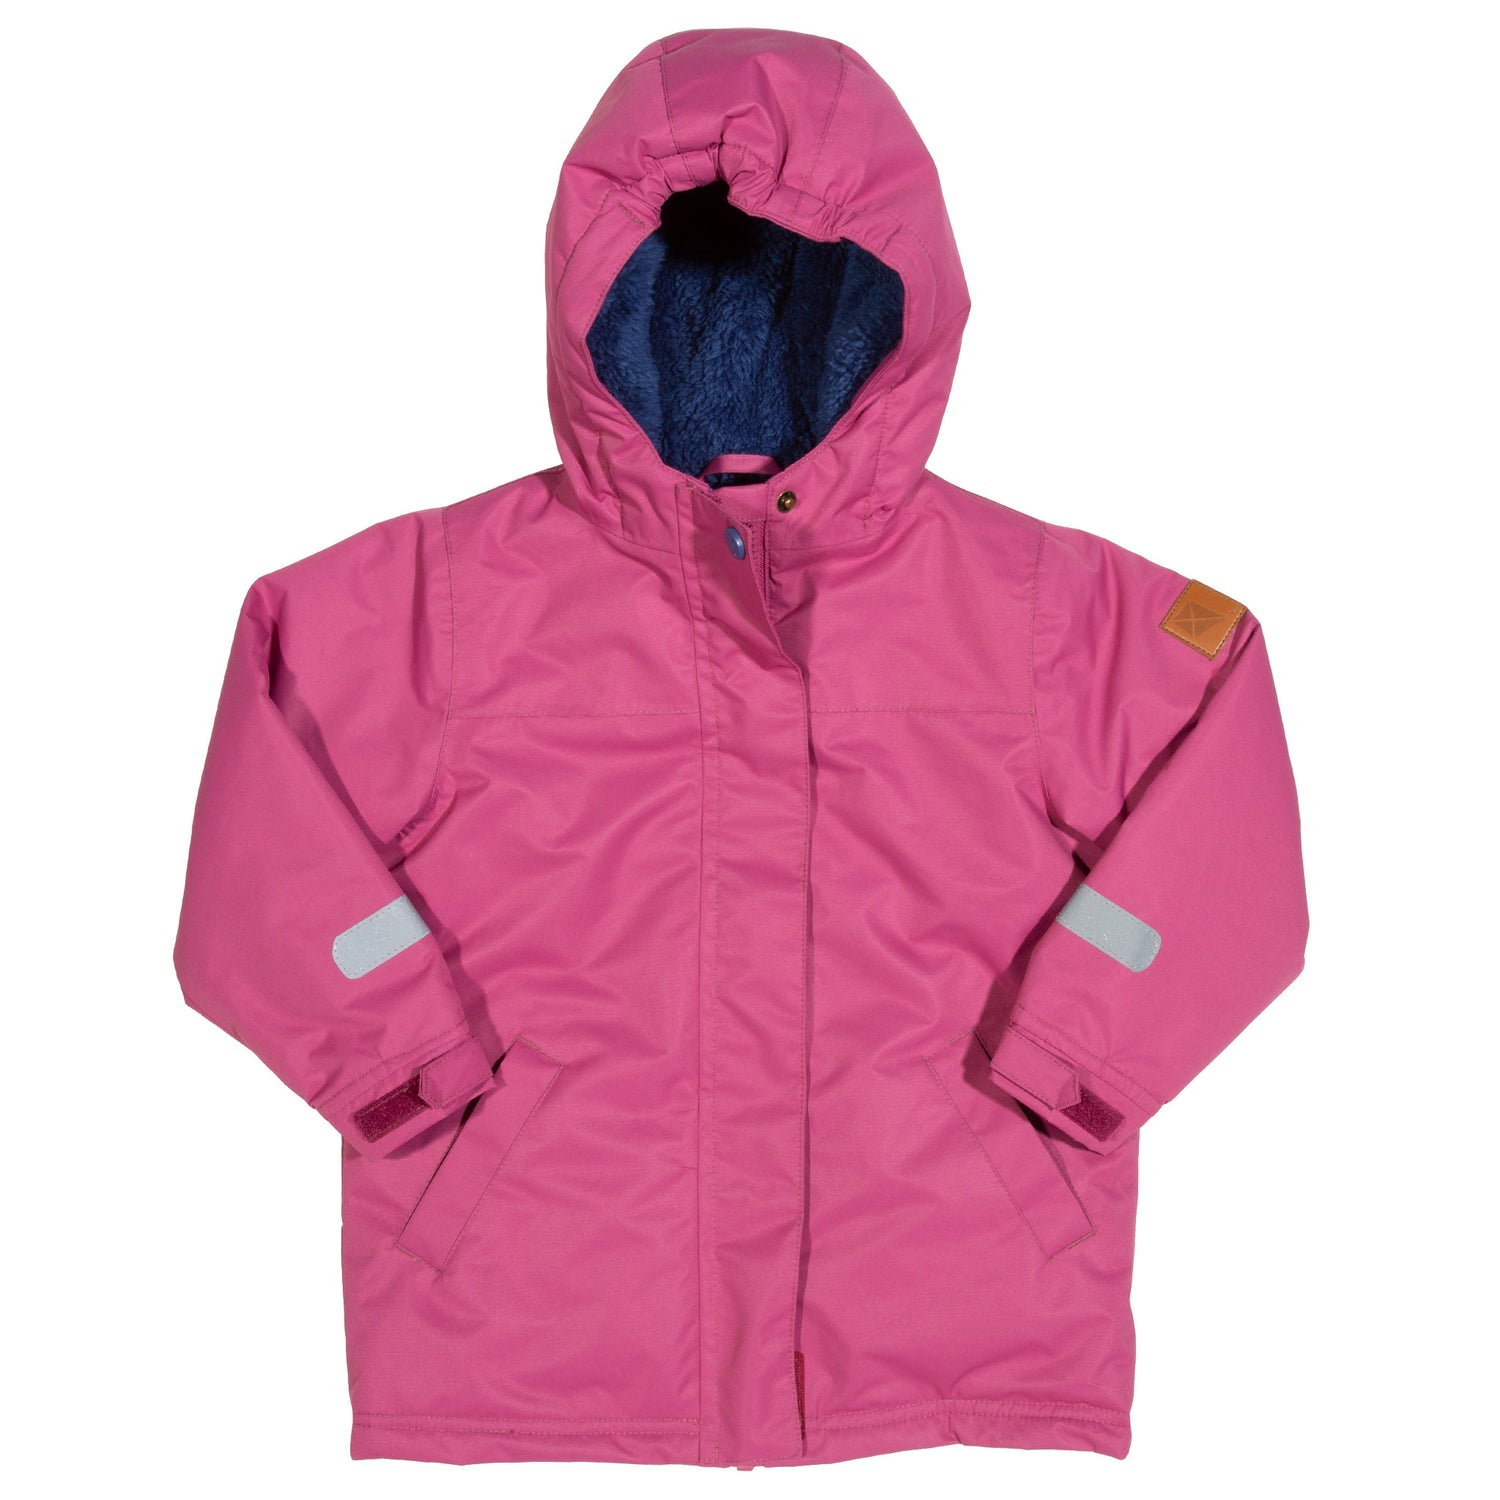 Pink Go coat for babies